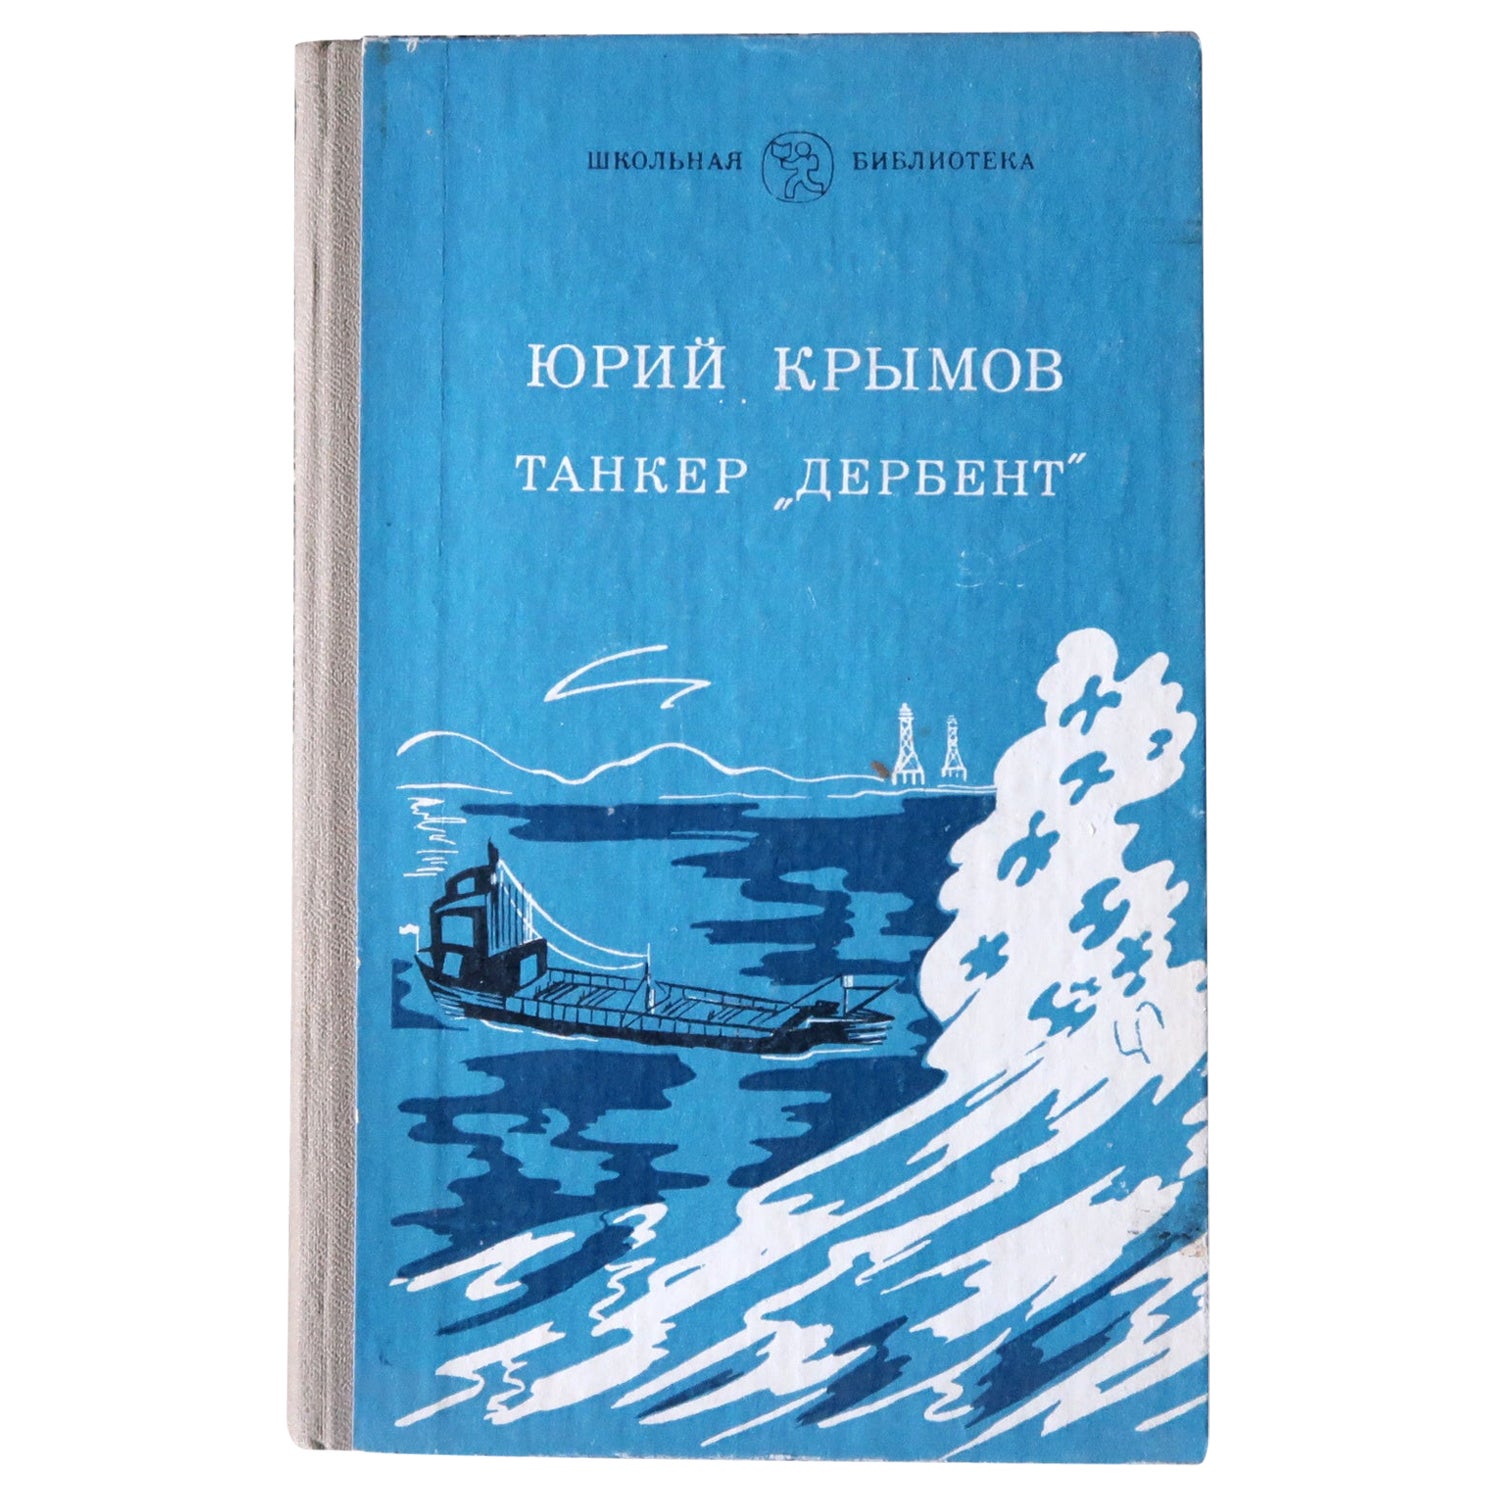 Vintage USSR Book: 'Tanker Derbent' by Yuri Krymov - A Maritime Tale, 1J115